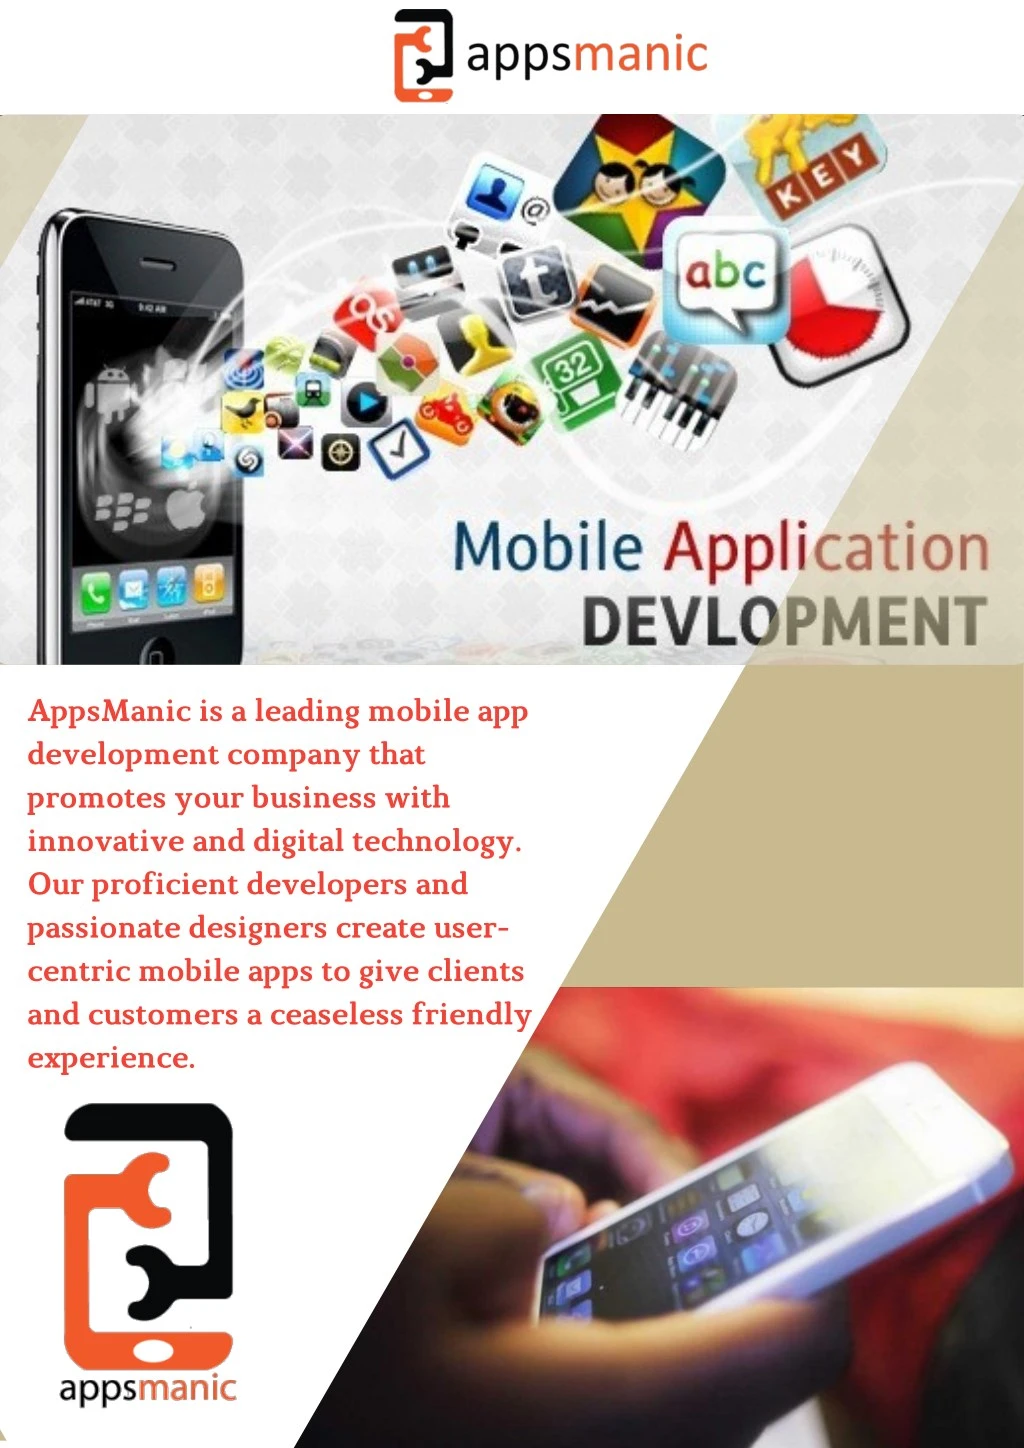 appsmanic is a leading mobile app development